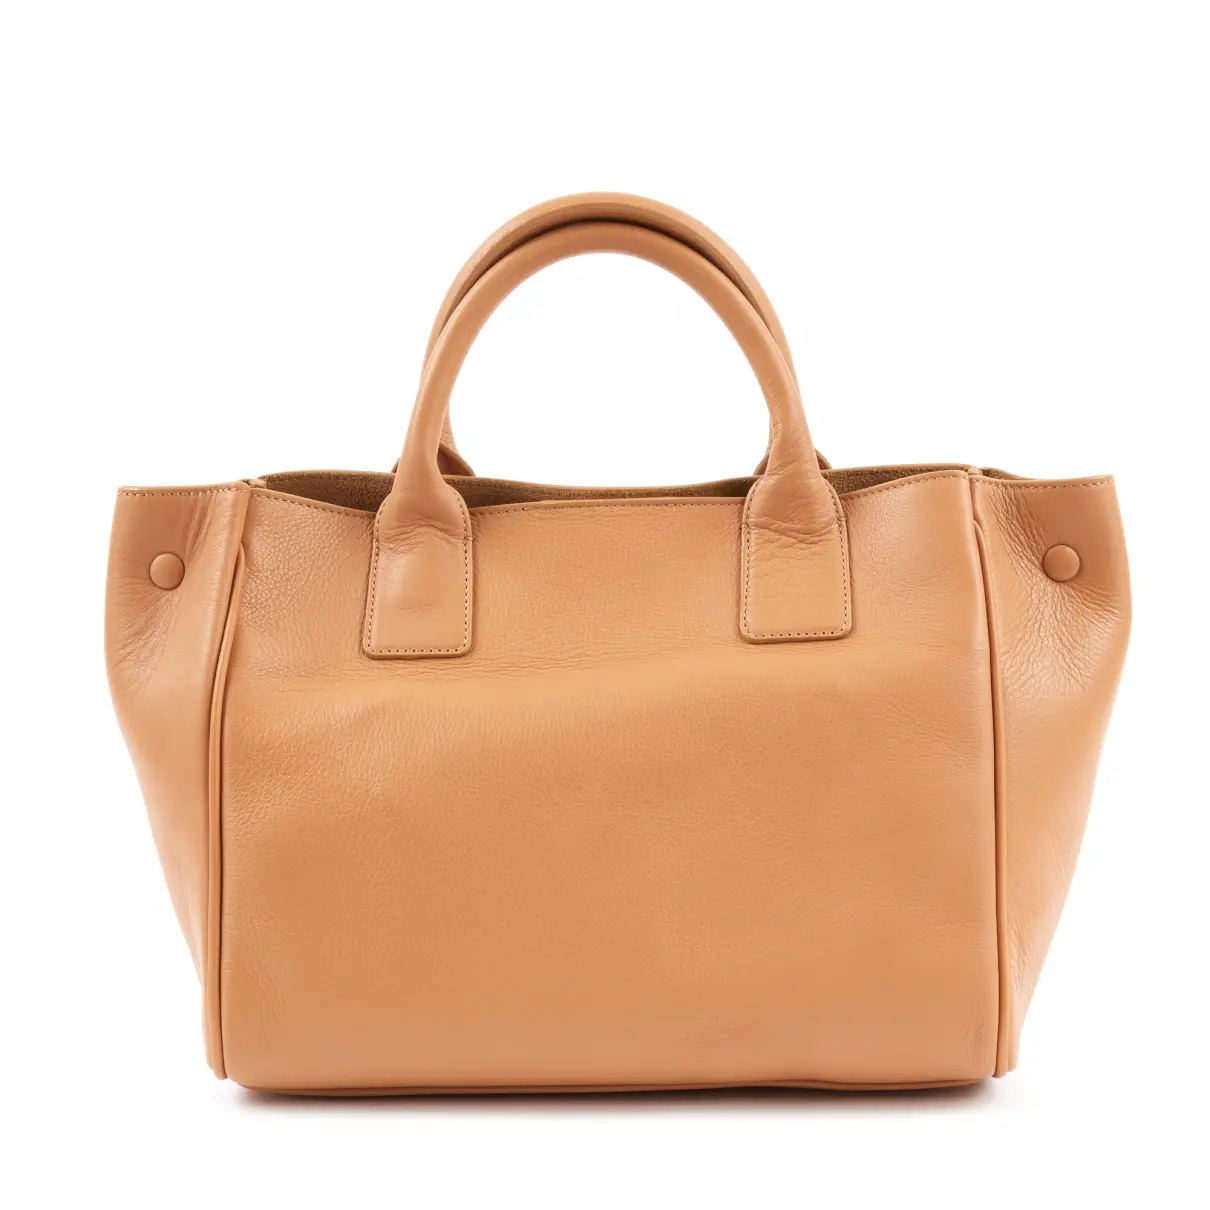 Buy Hill & Friends Leather handbag online